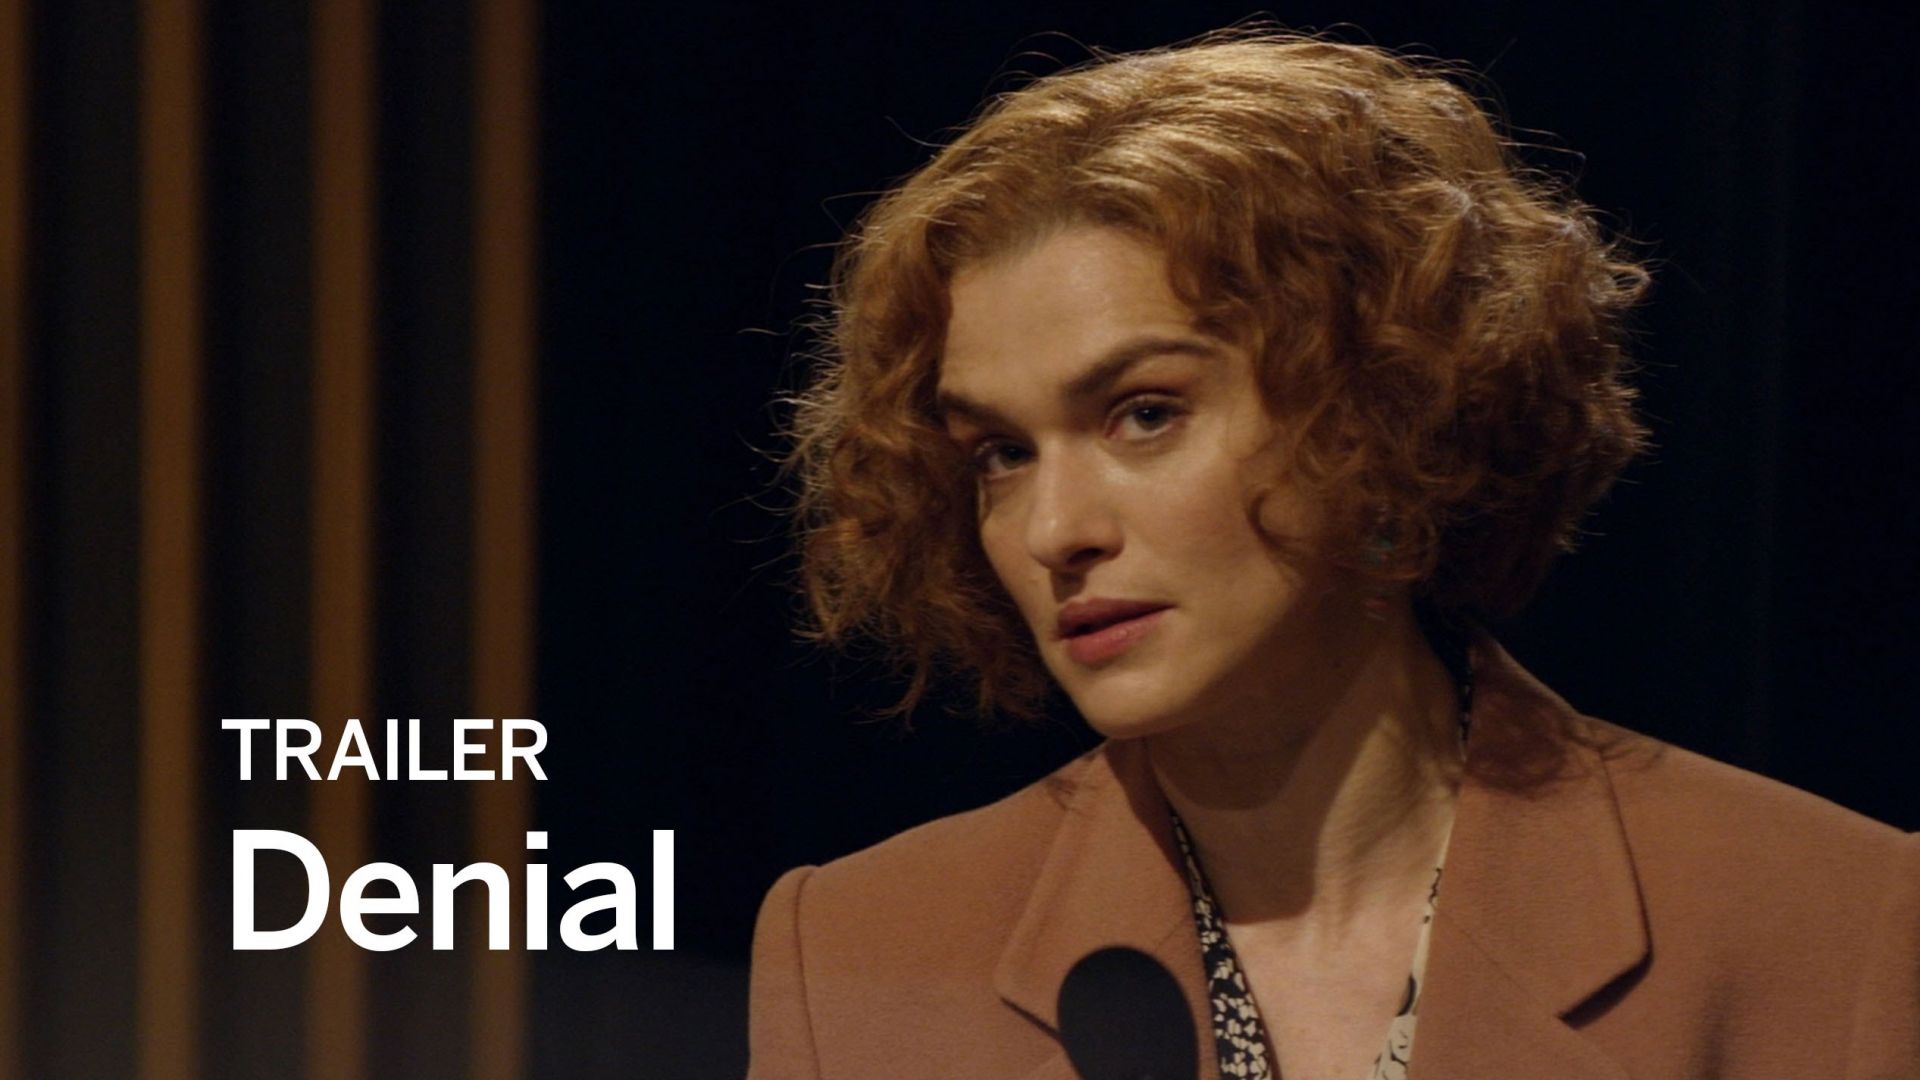 'Denial' Trailer